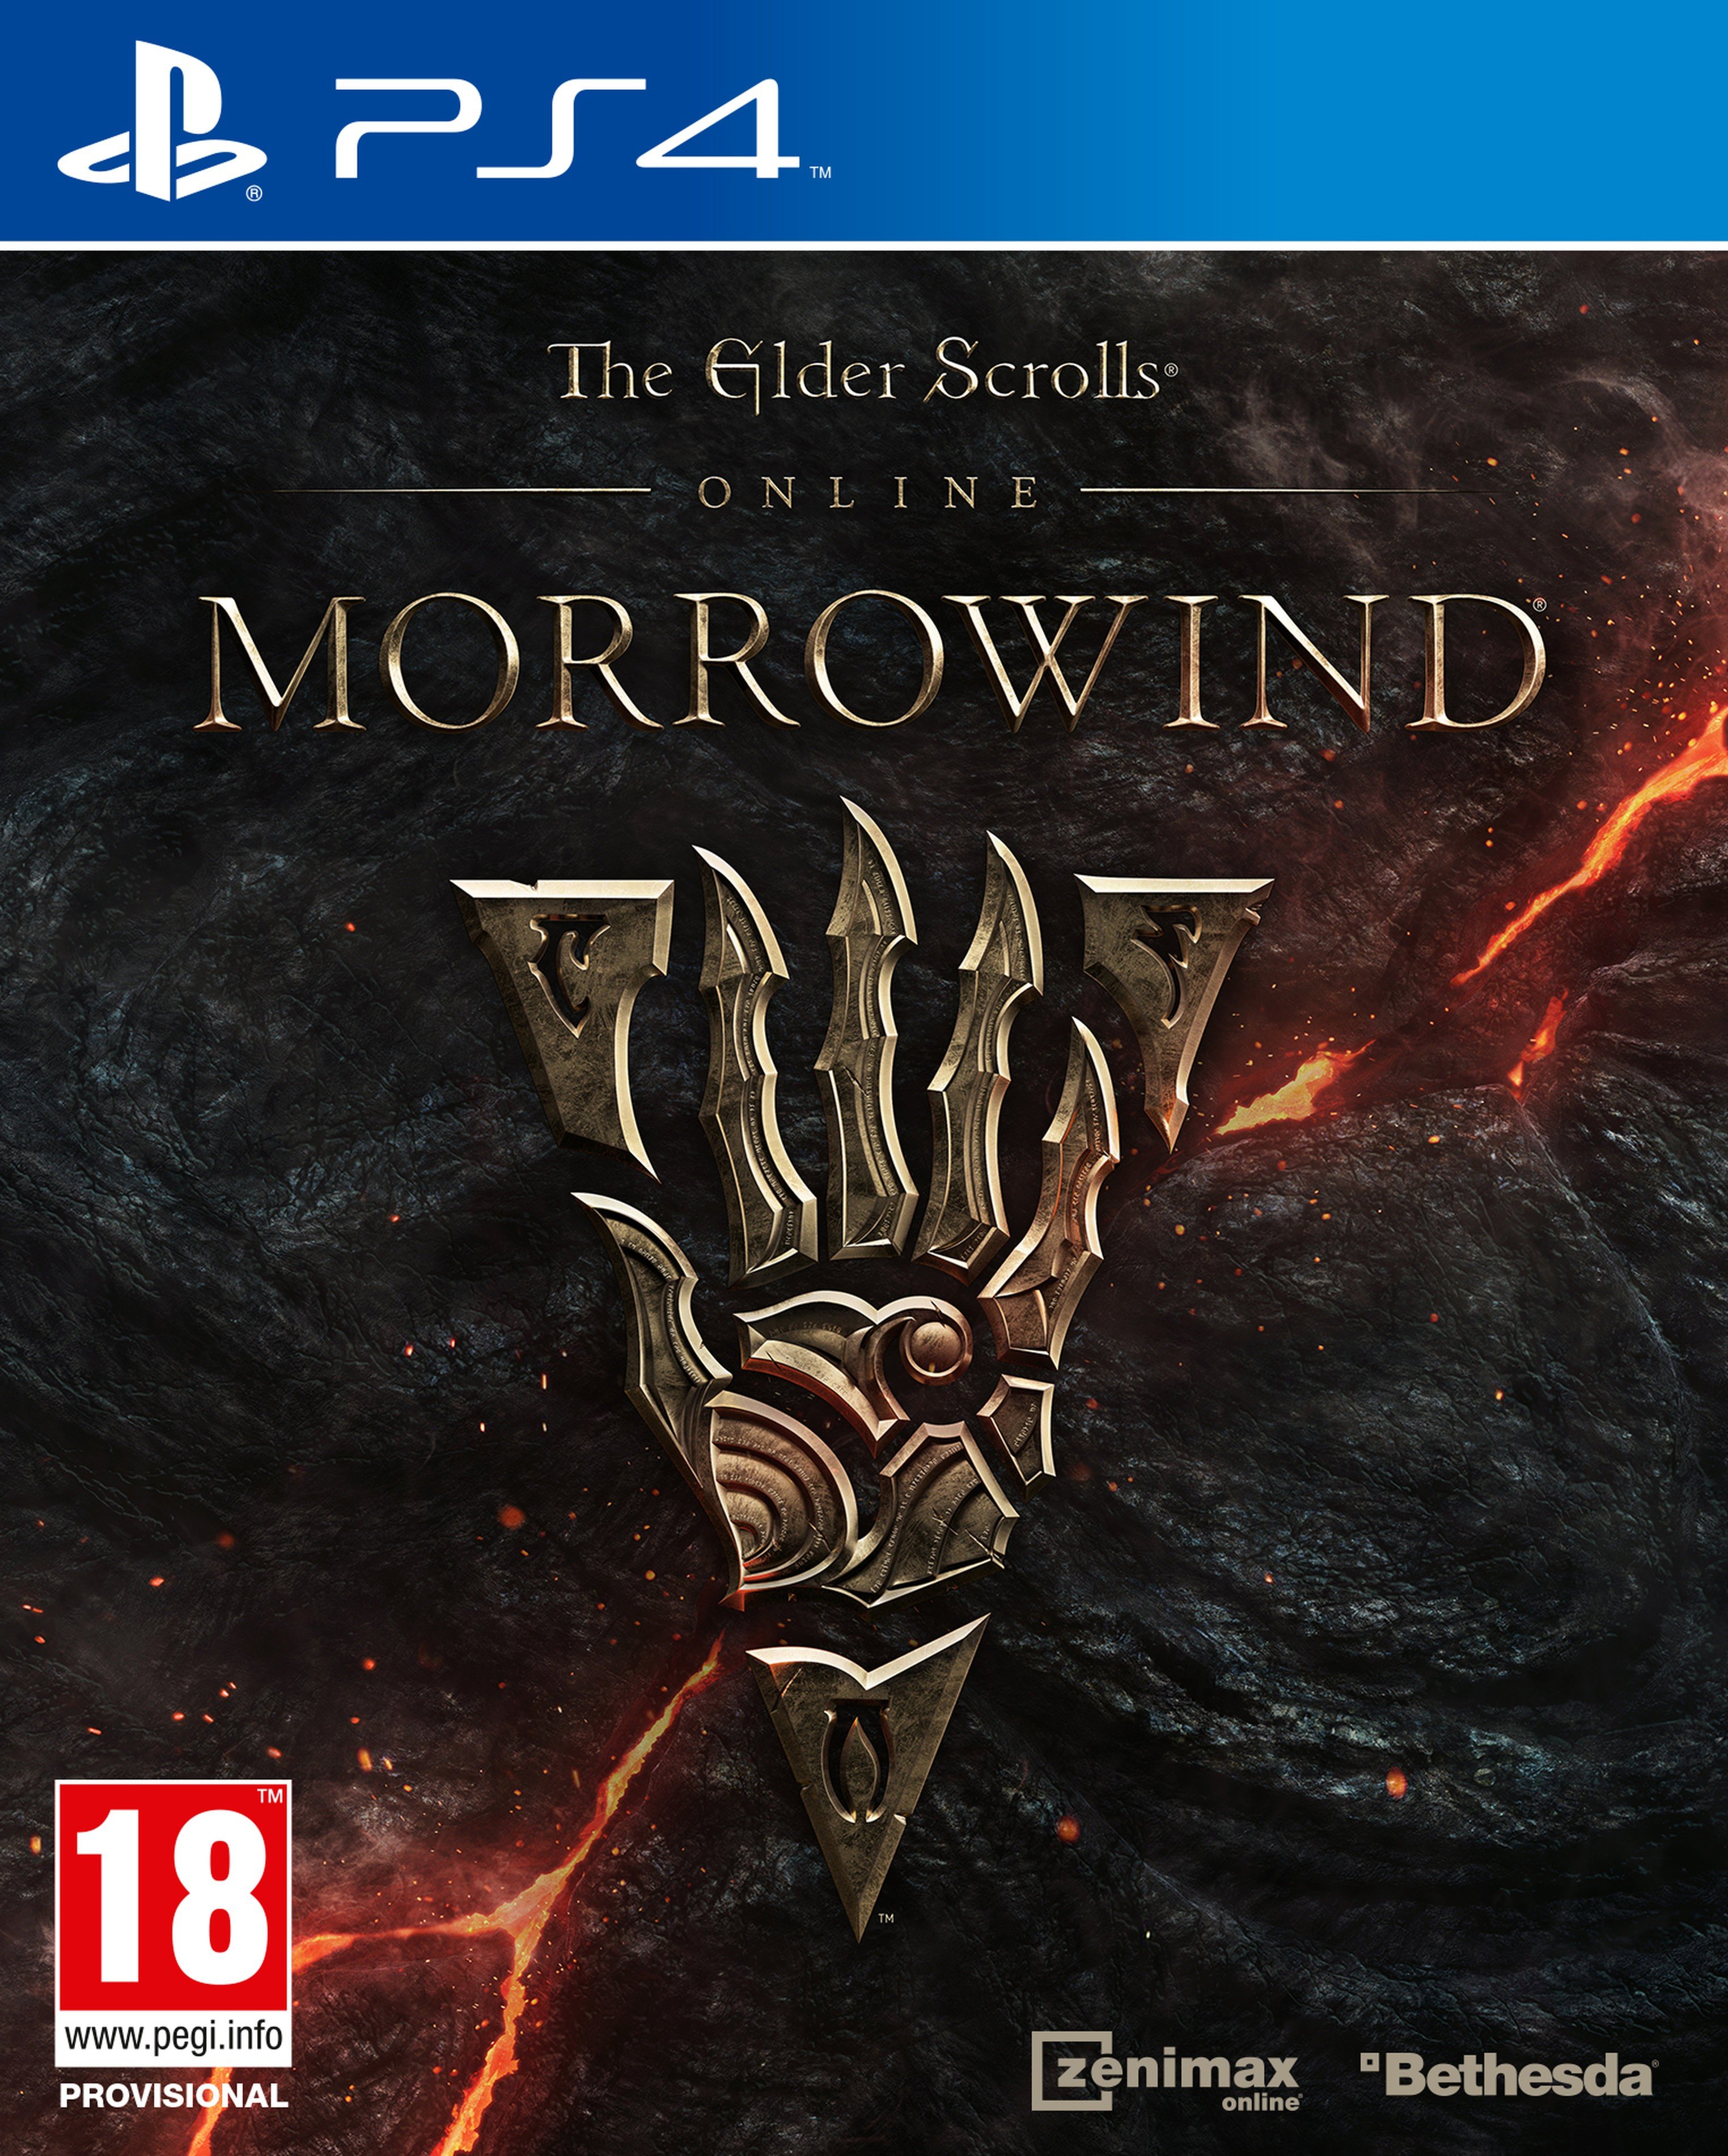 download the new version The Elder Scrolls Online